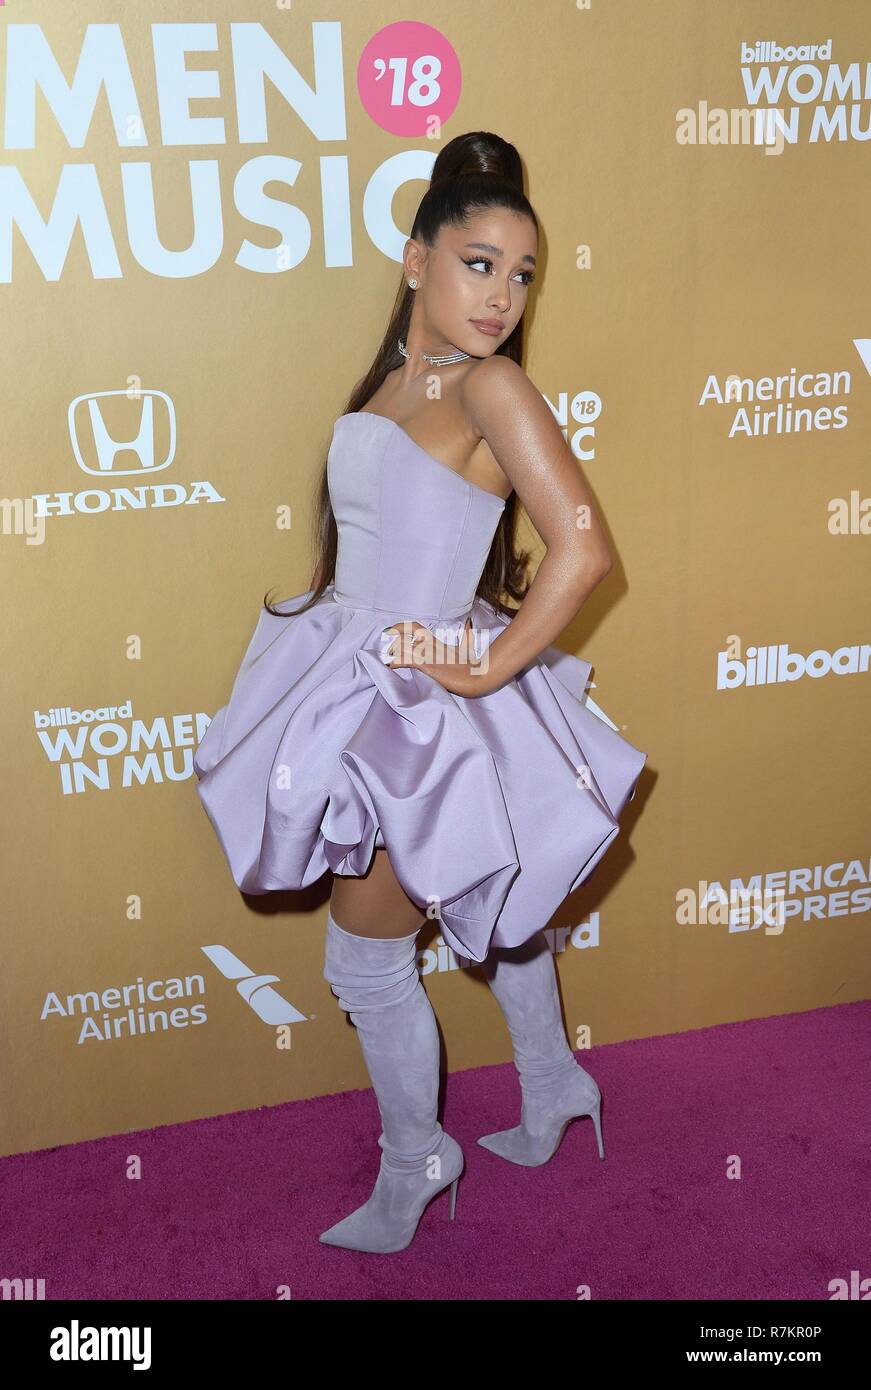 Ariana Grande at arrivals for Billboard Women in Music 2018, Pier 36 ...